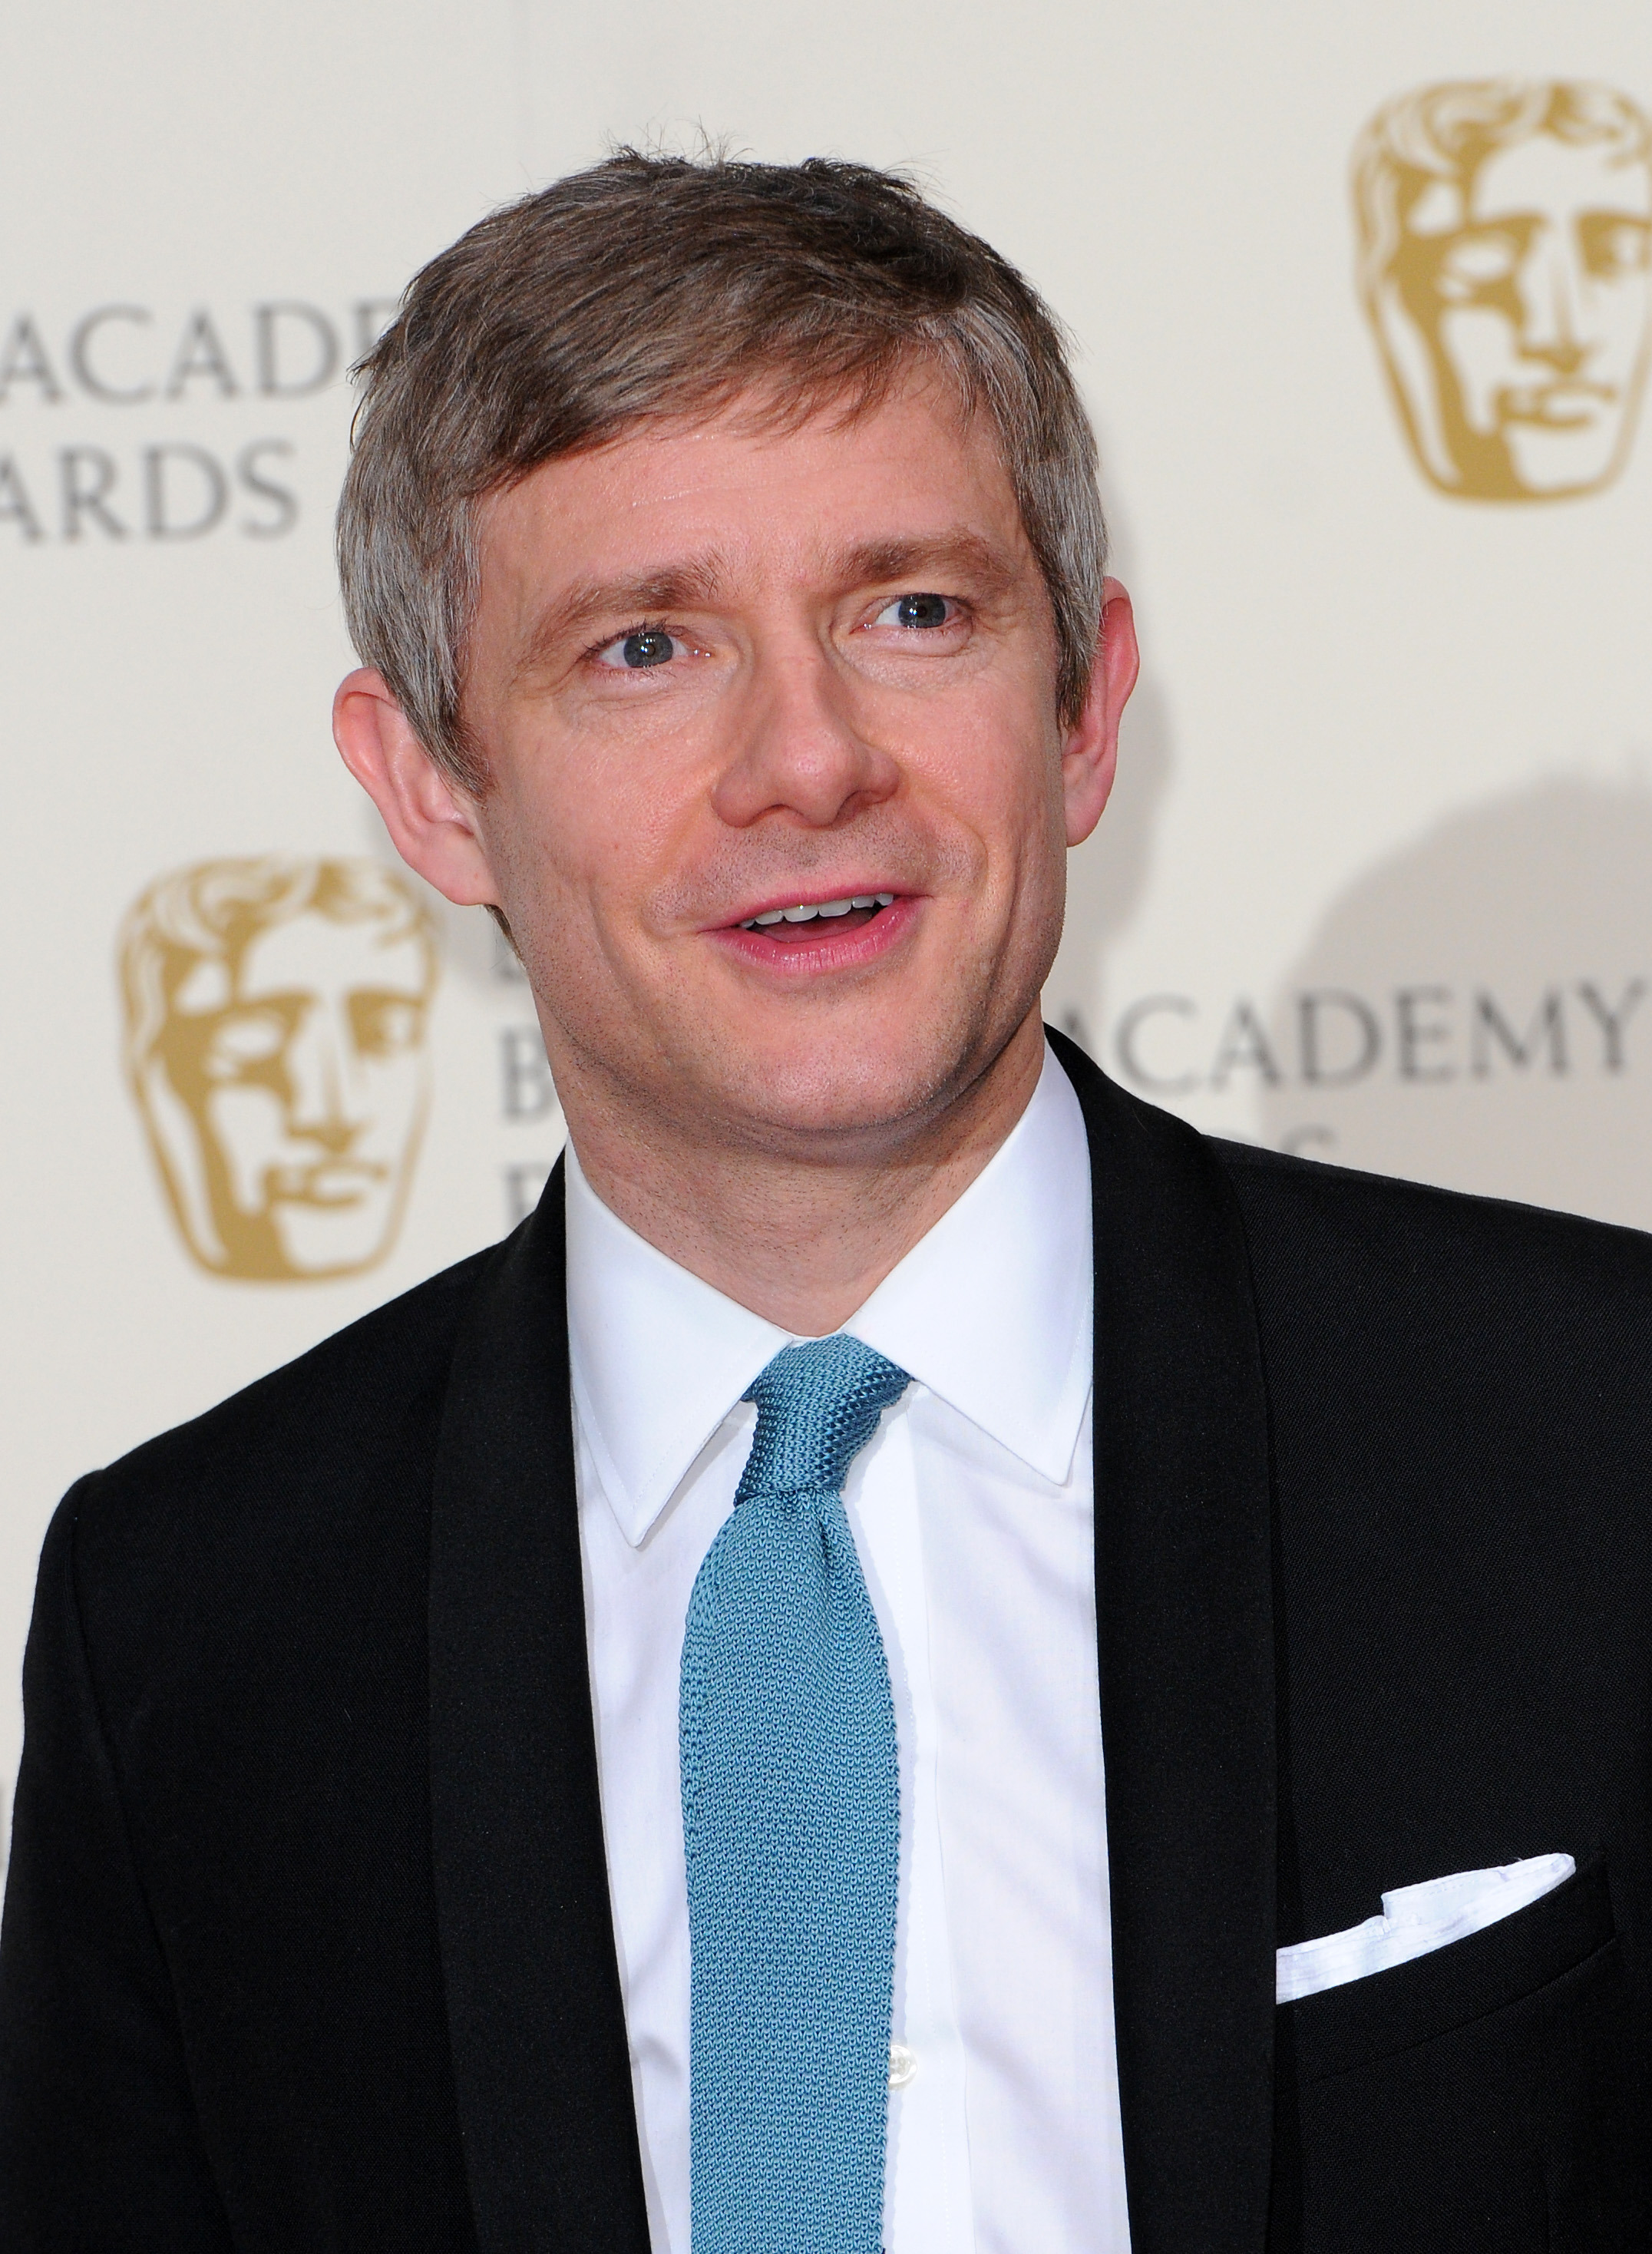 Actor Martin Freeman at the 67th BAFTAS in London on Feb. 8, 2015.